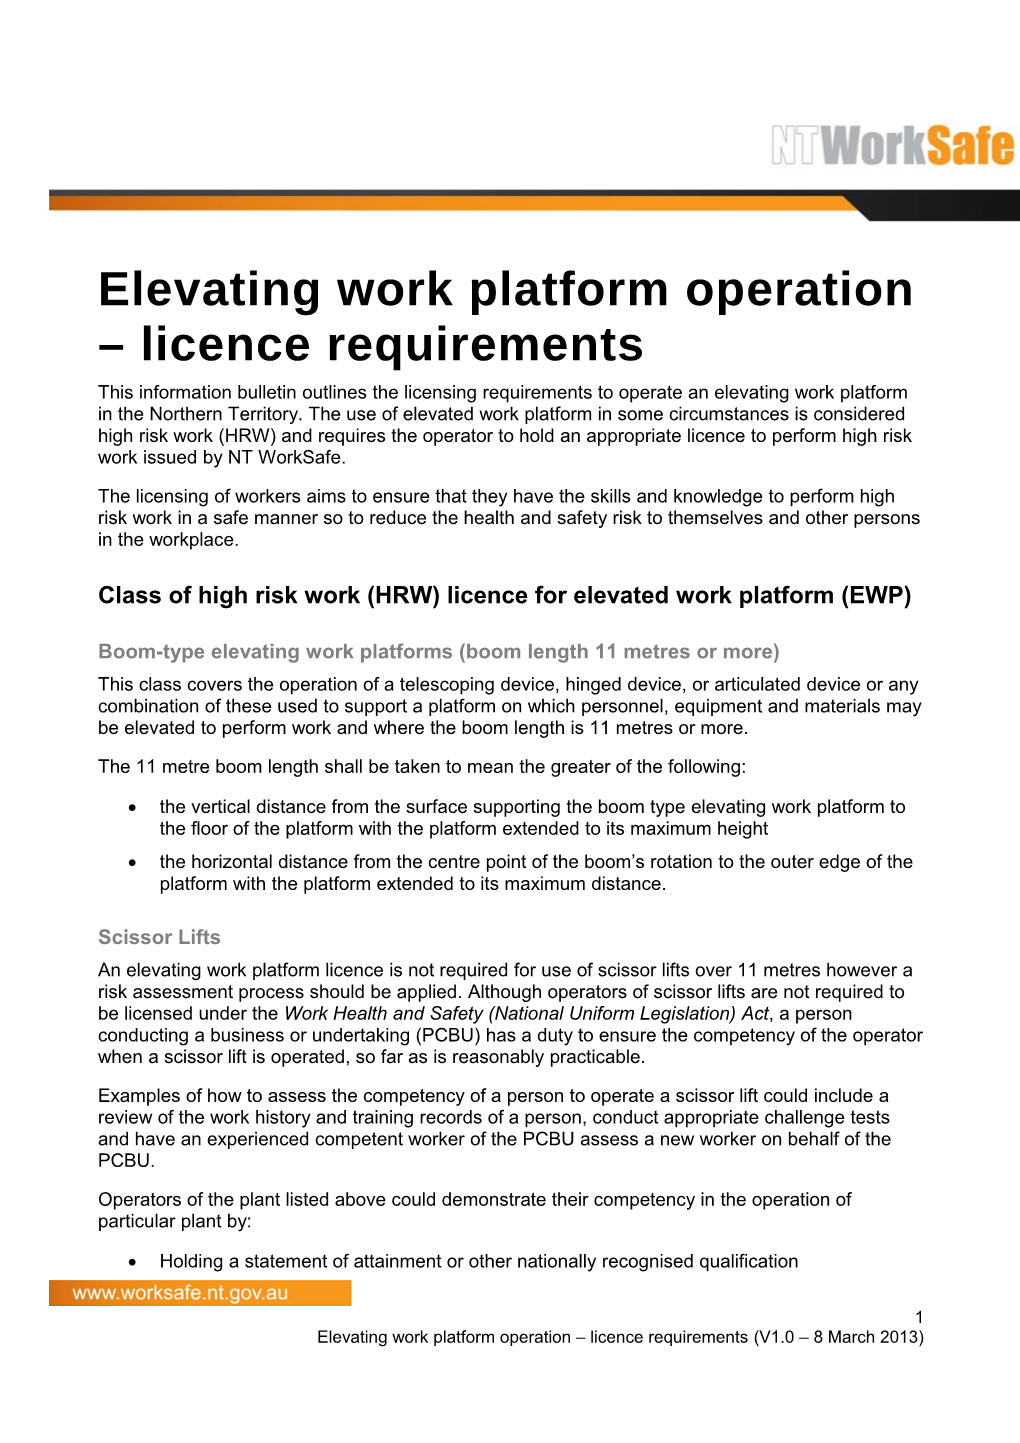 Elevating Work Platform Operation Licence Requirements